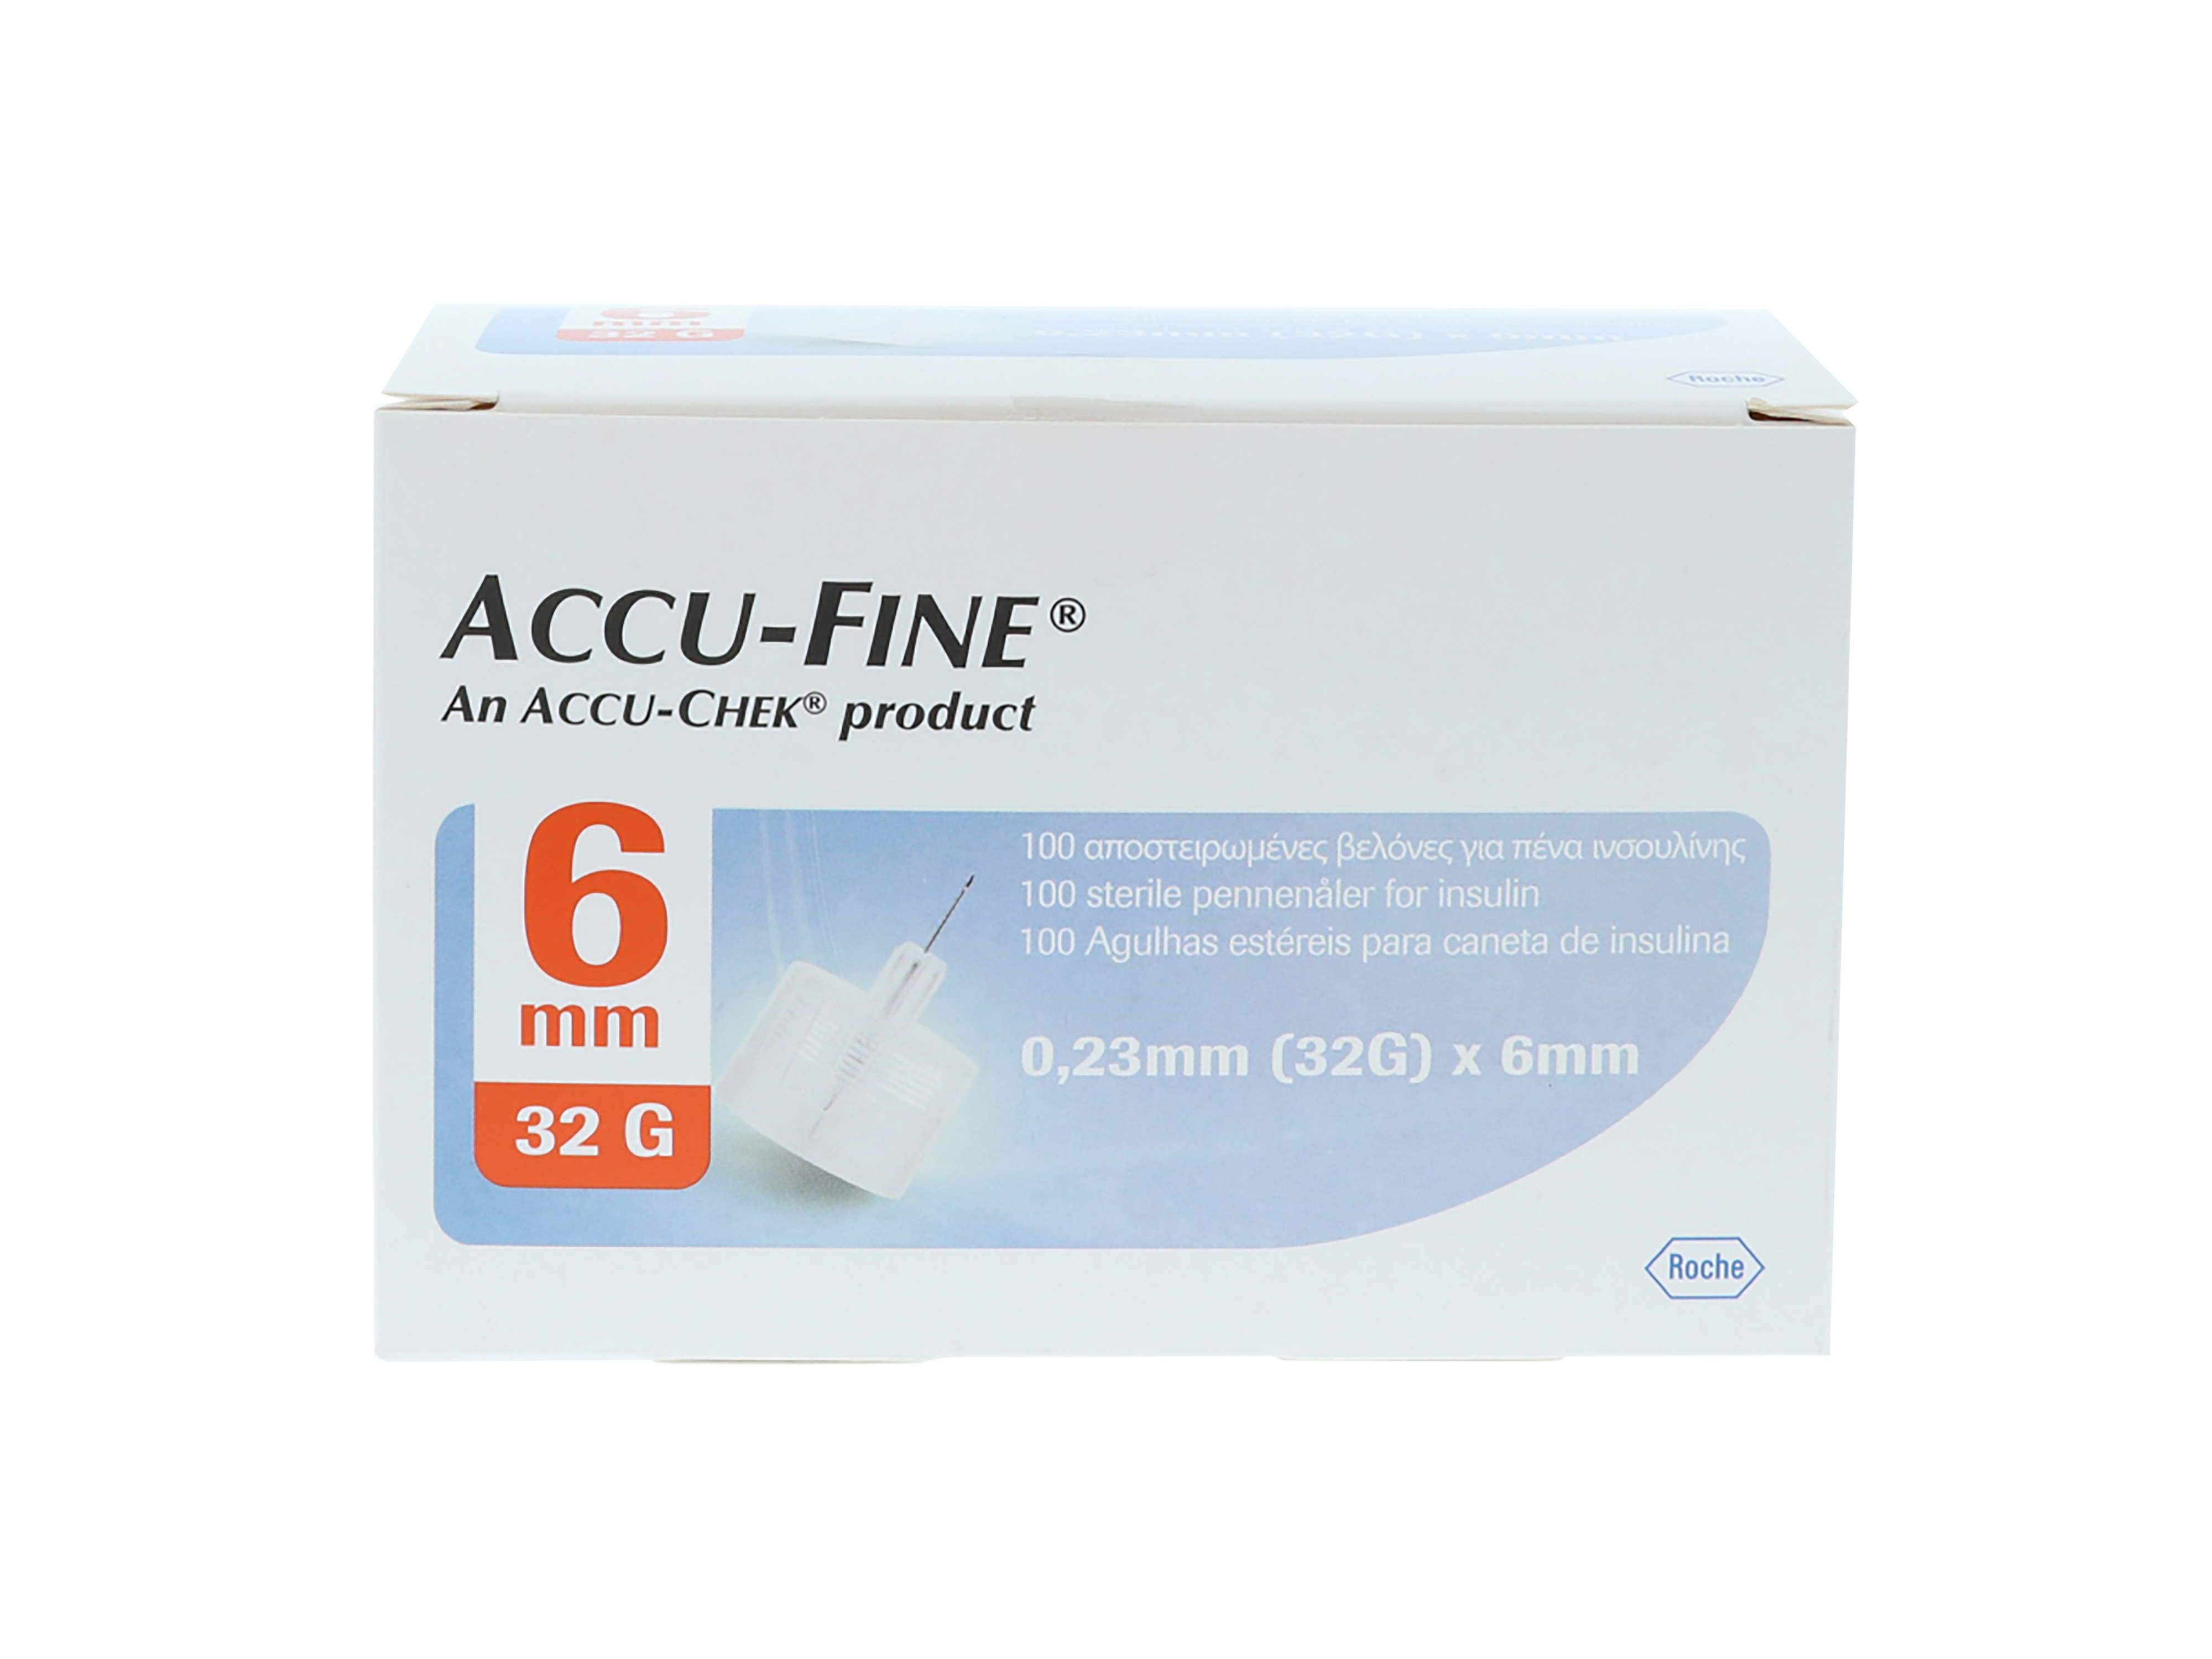 Accu-fine Pennekanyler til insulinpenner, 32G 6mm (0,25mm x 6mm), 100 stk